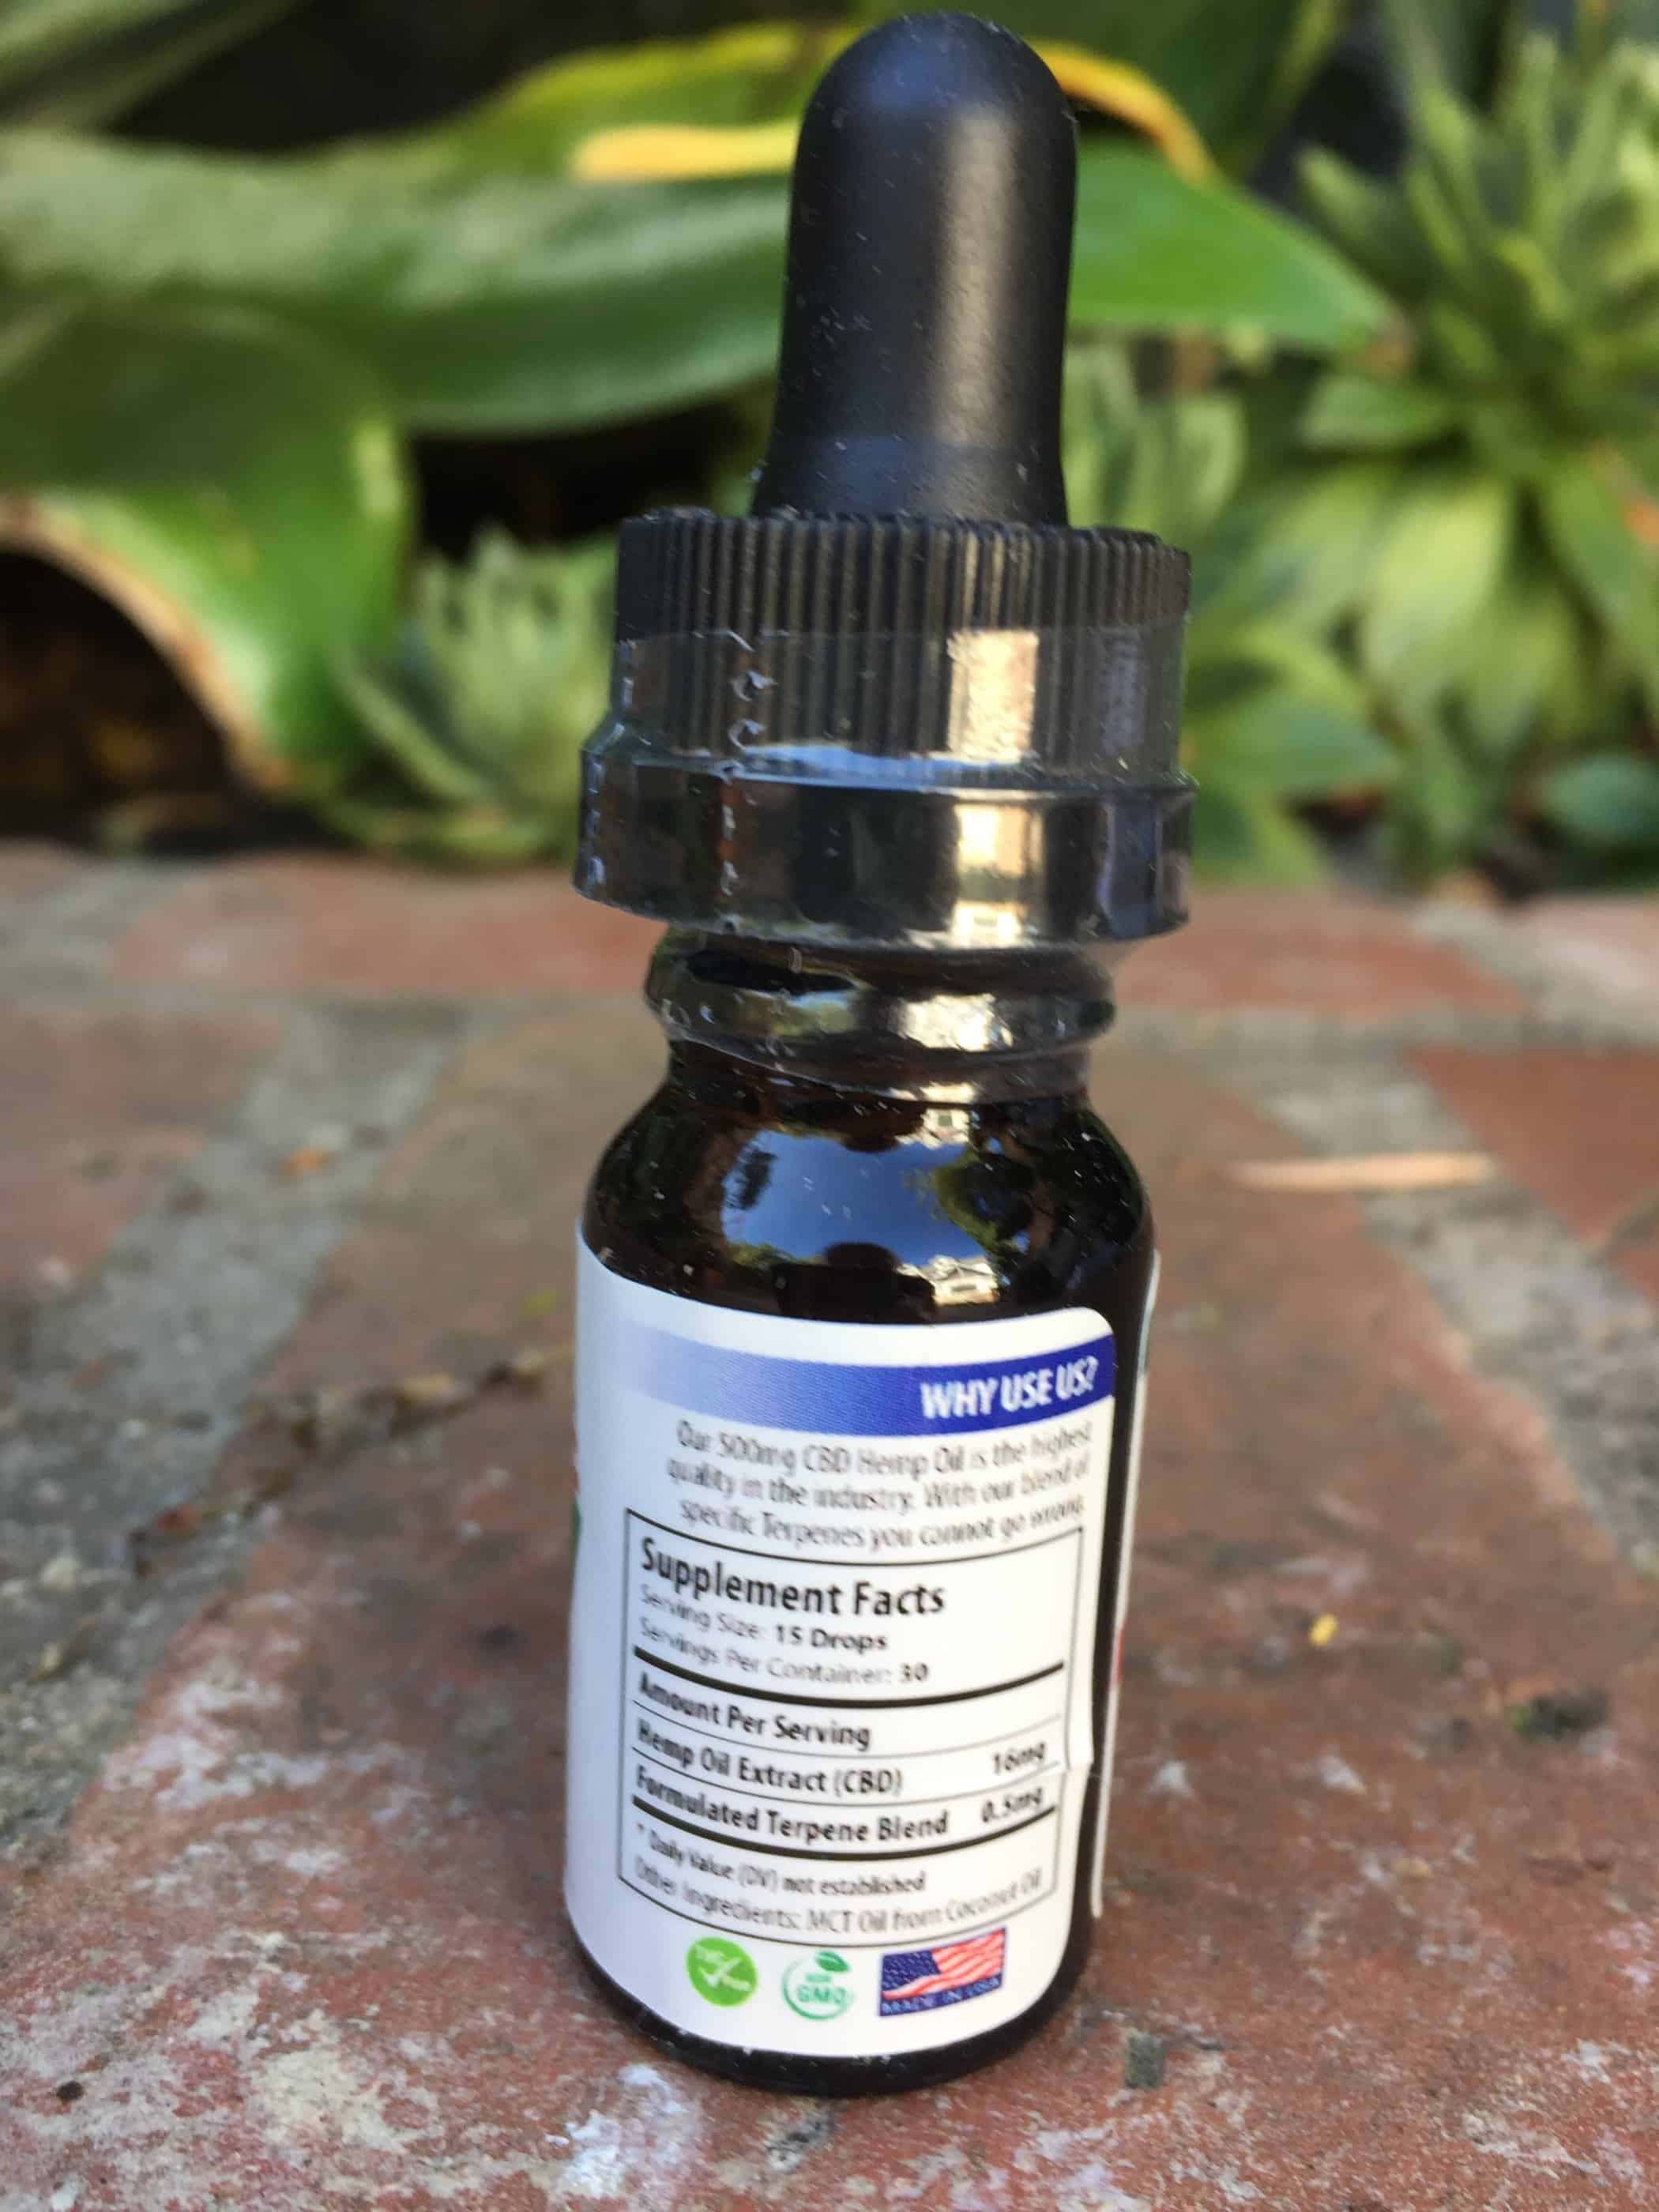 american hemp oil pure cbd hemp oil 500 mg review save on cannabis specifications